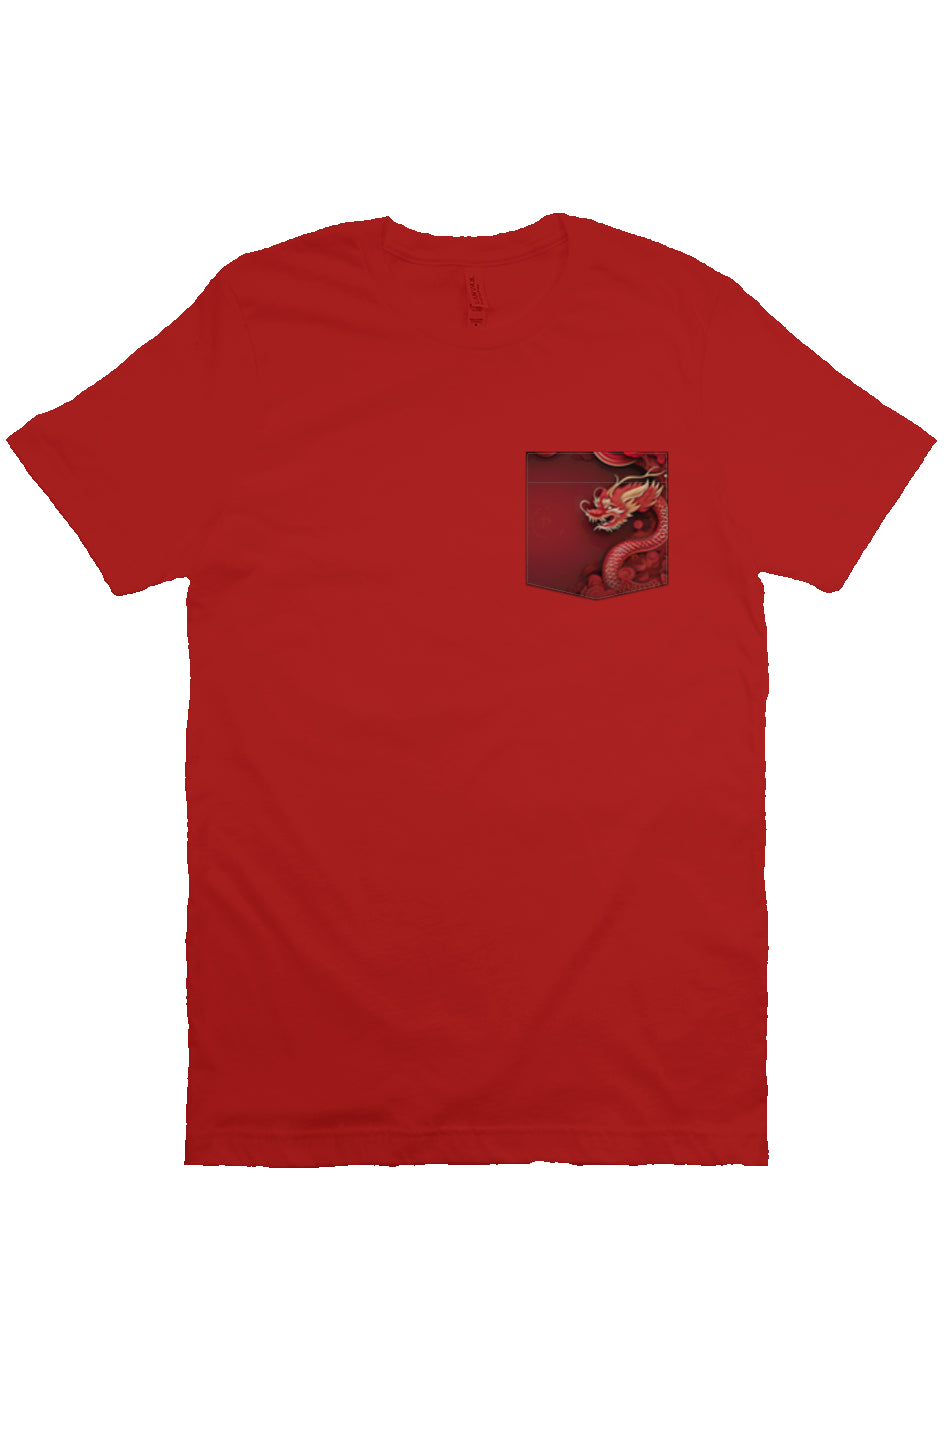 CS Year of The Dragon Series Canvas T Shirt